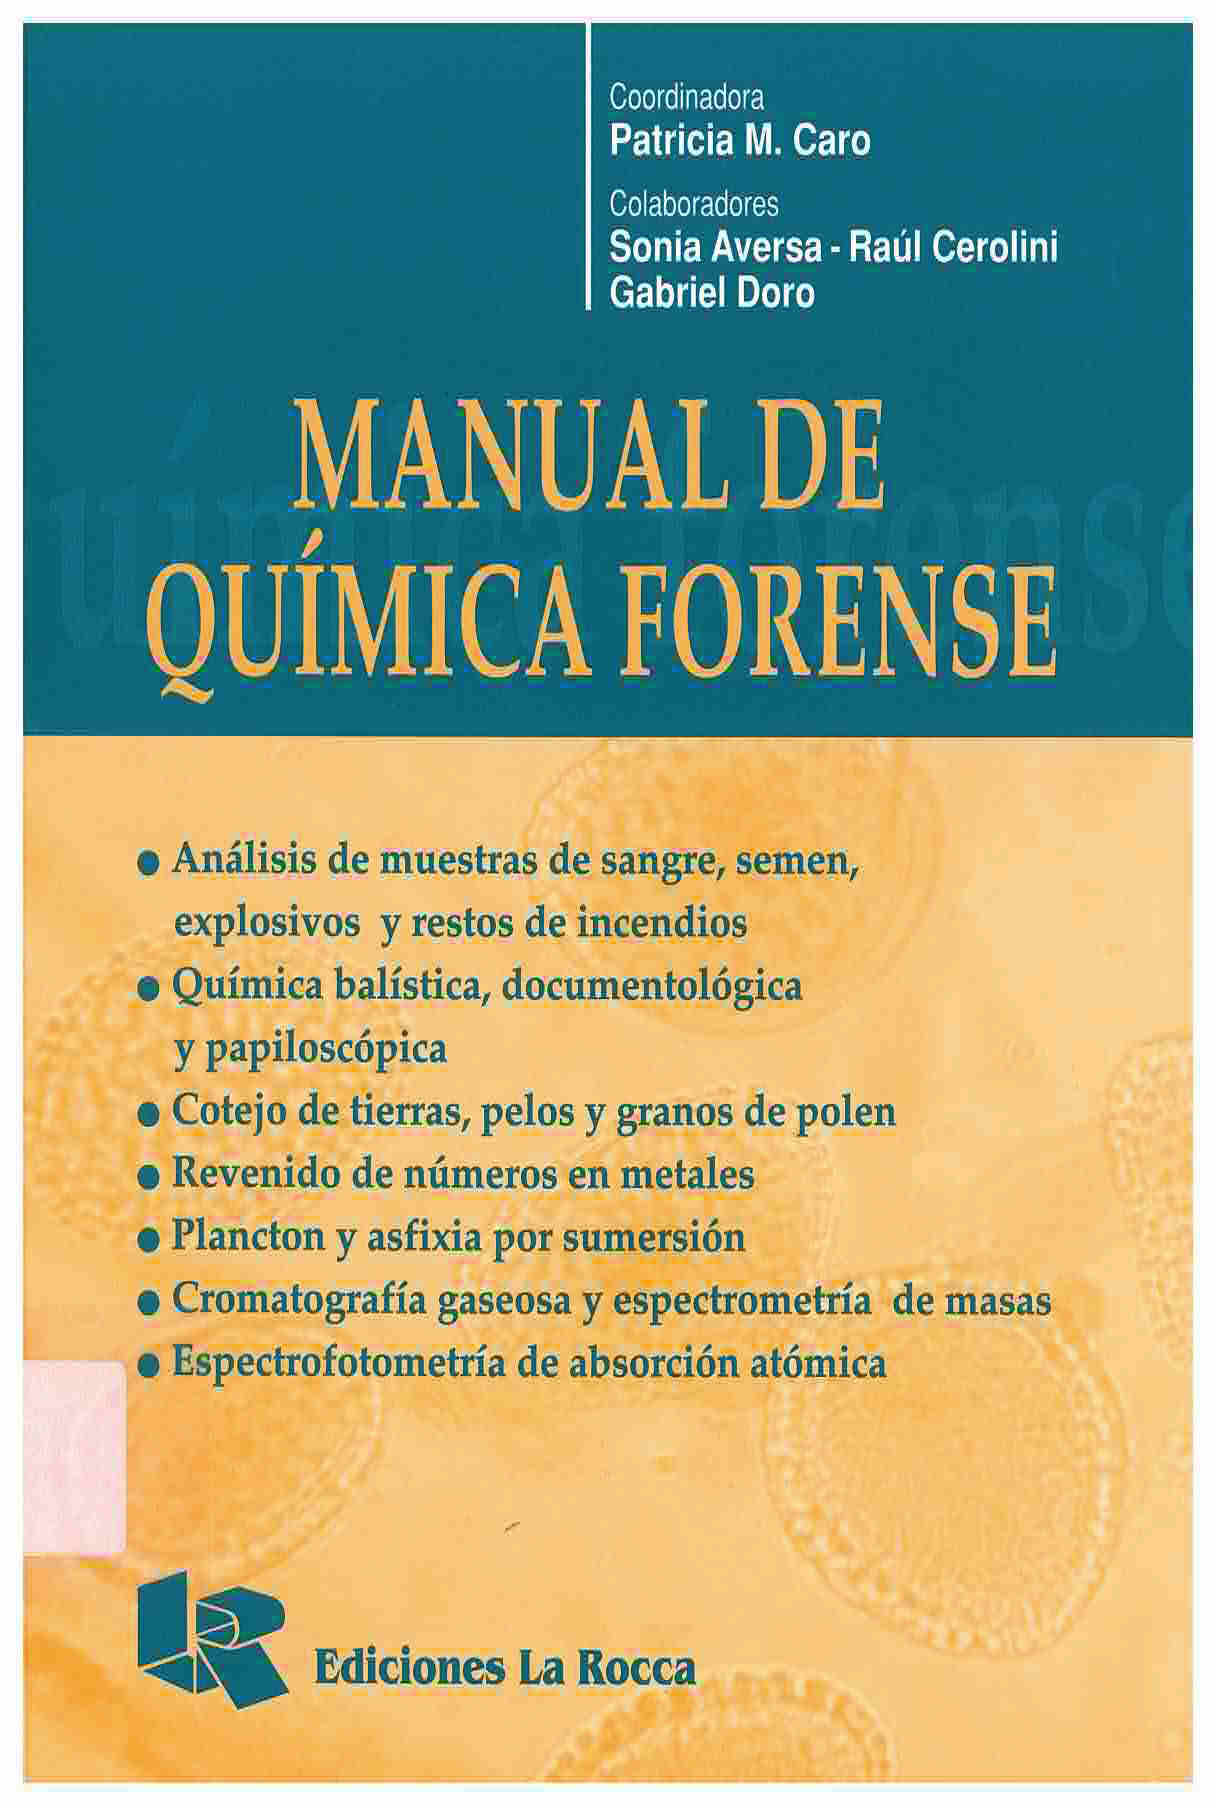 Manual de química forense